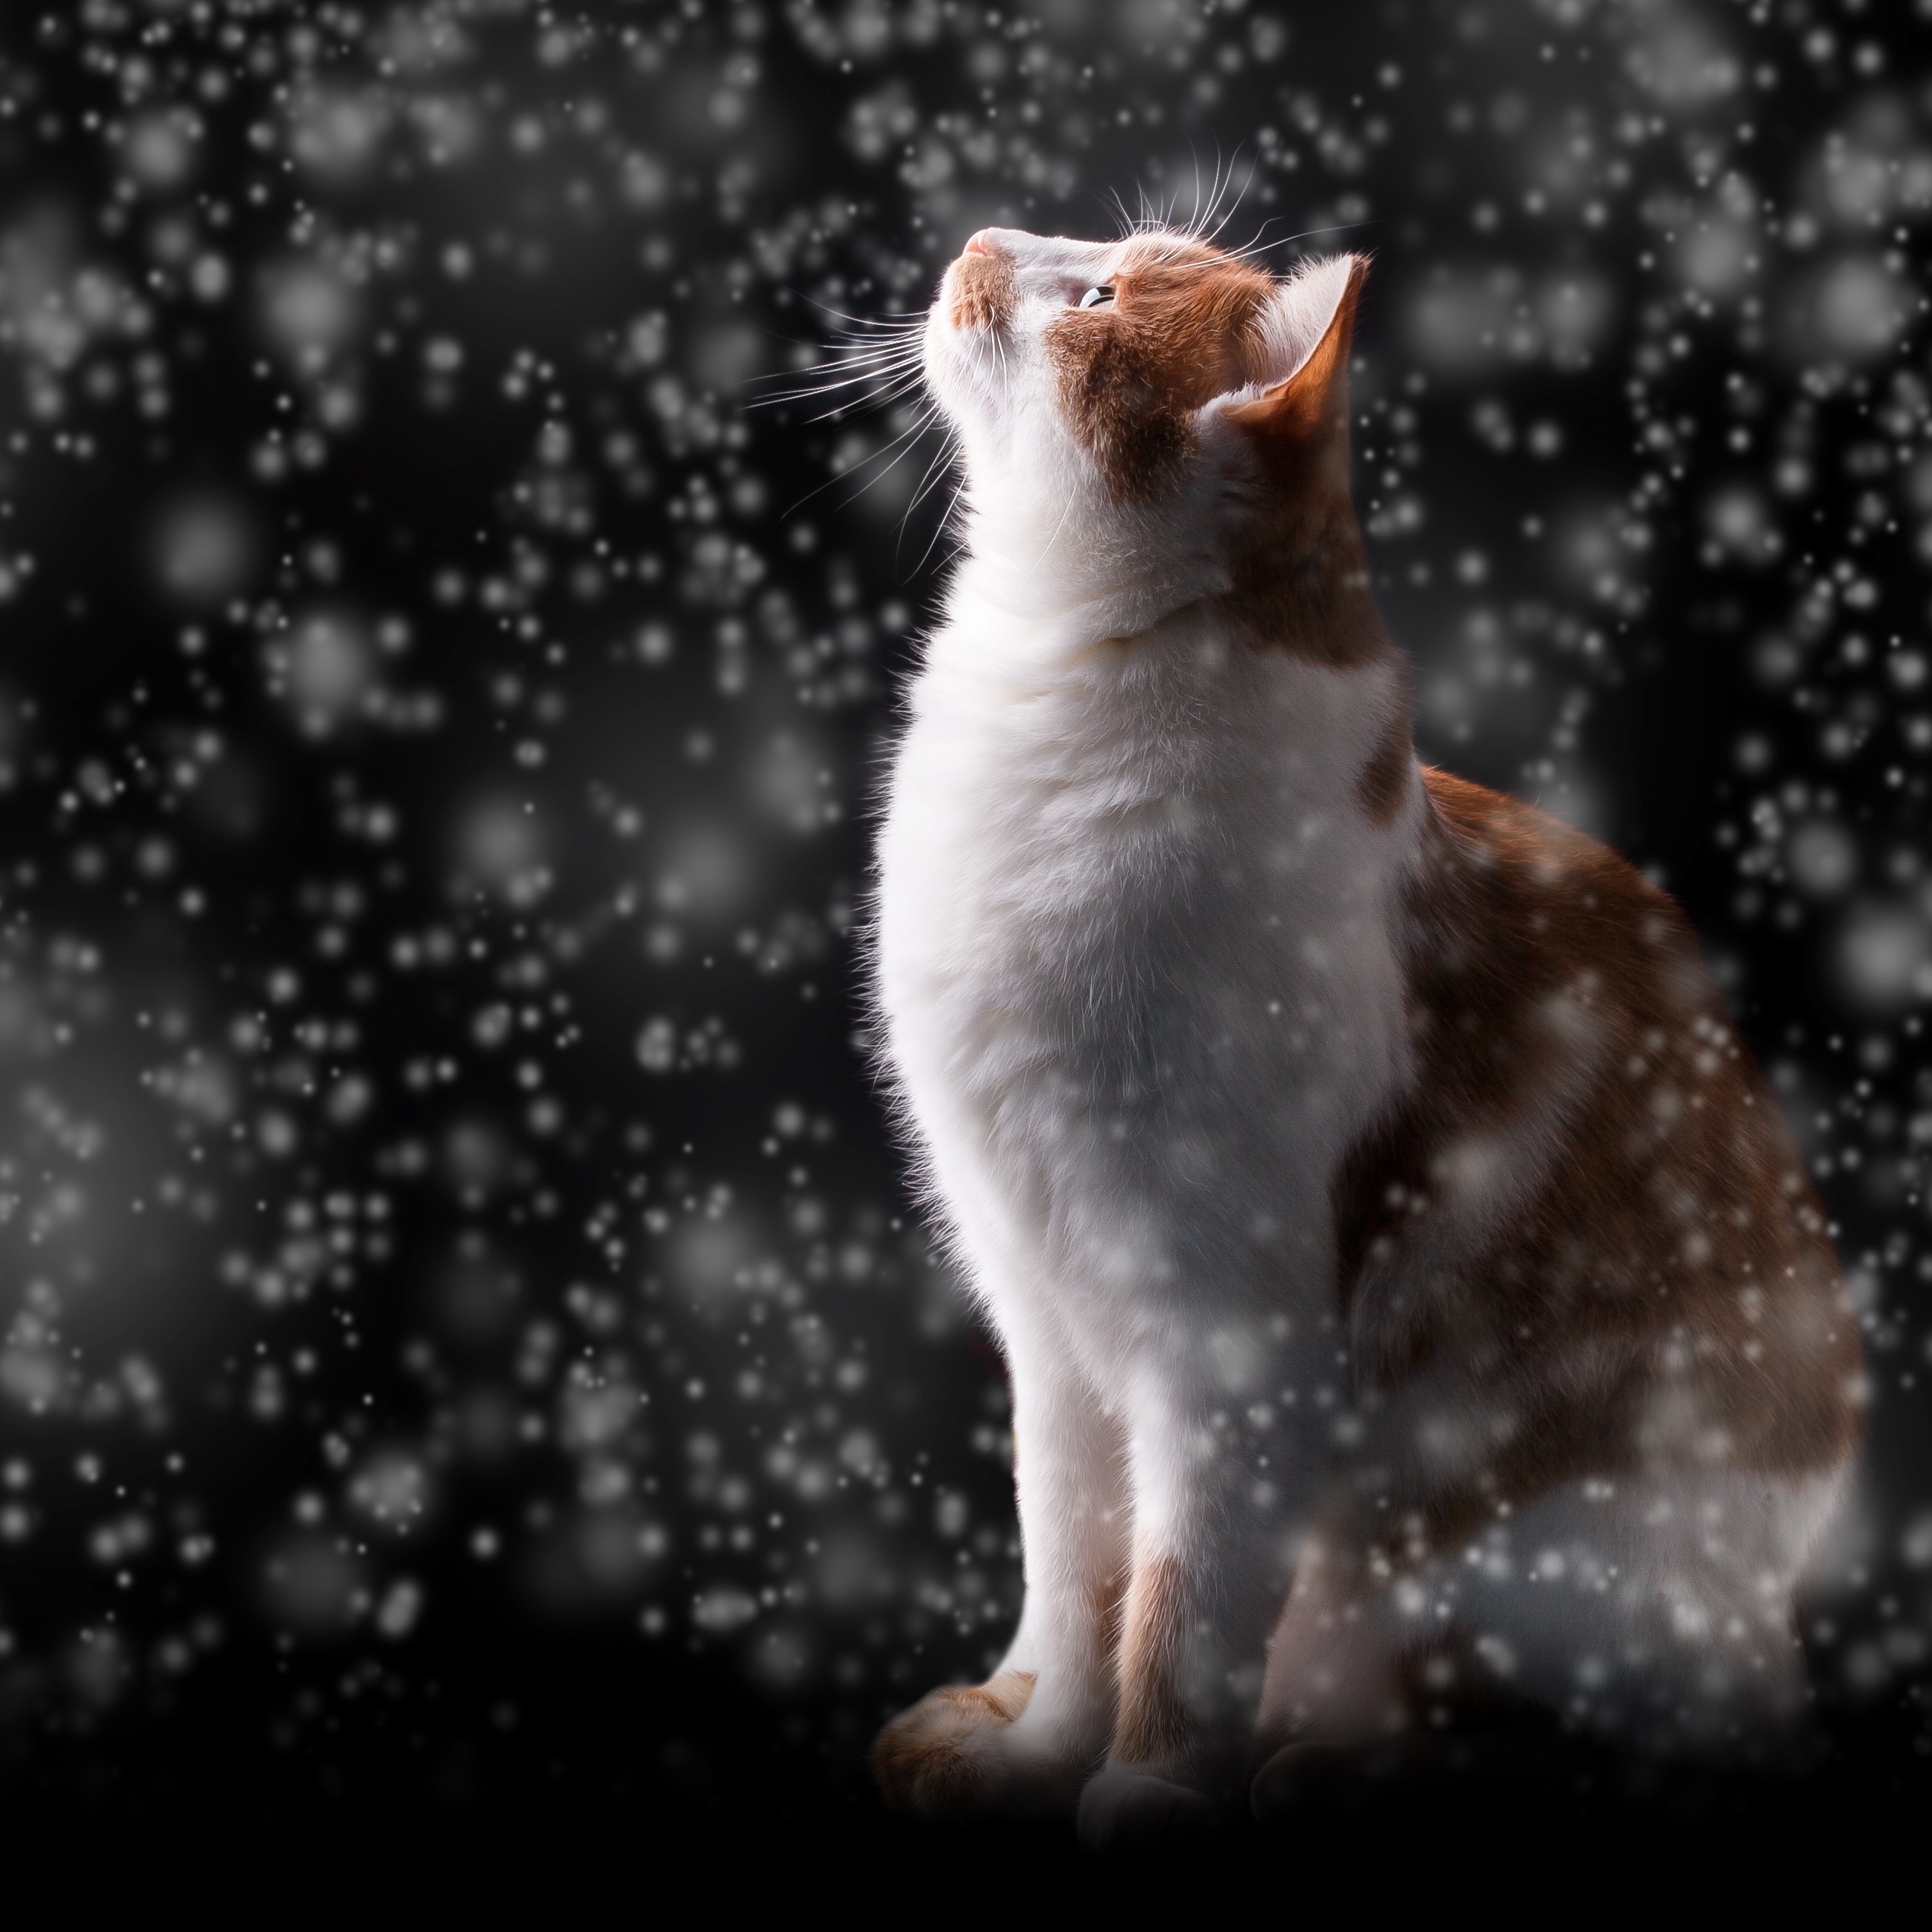 photoshop, snowfall, boquet, cat, animals, snow, glare, bokeh UHD